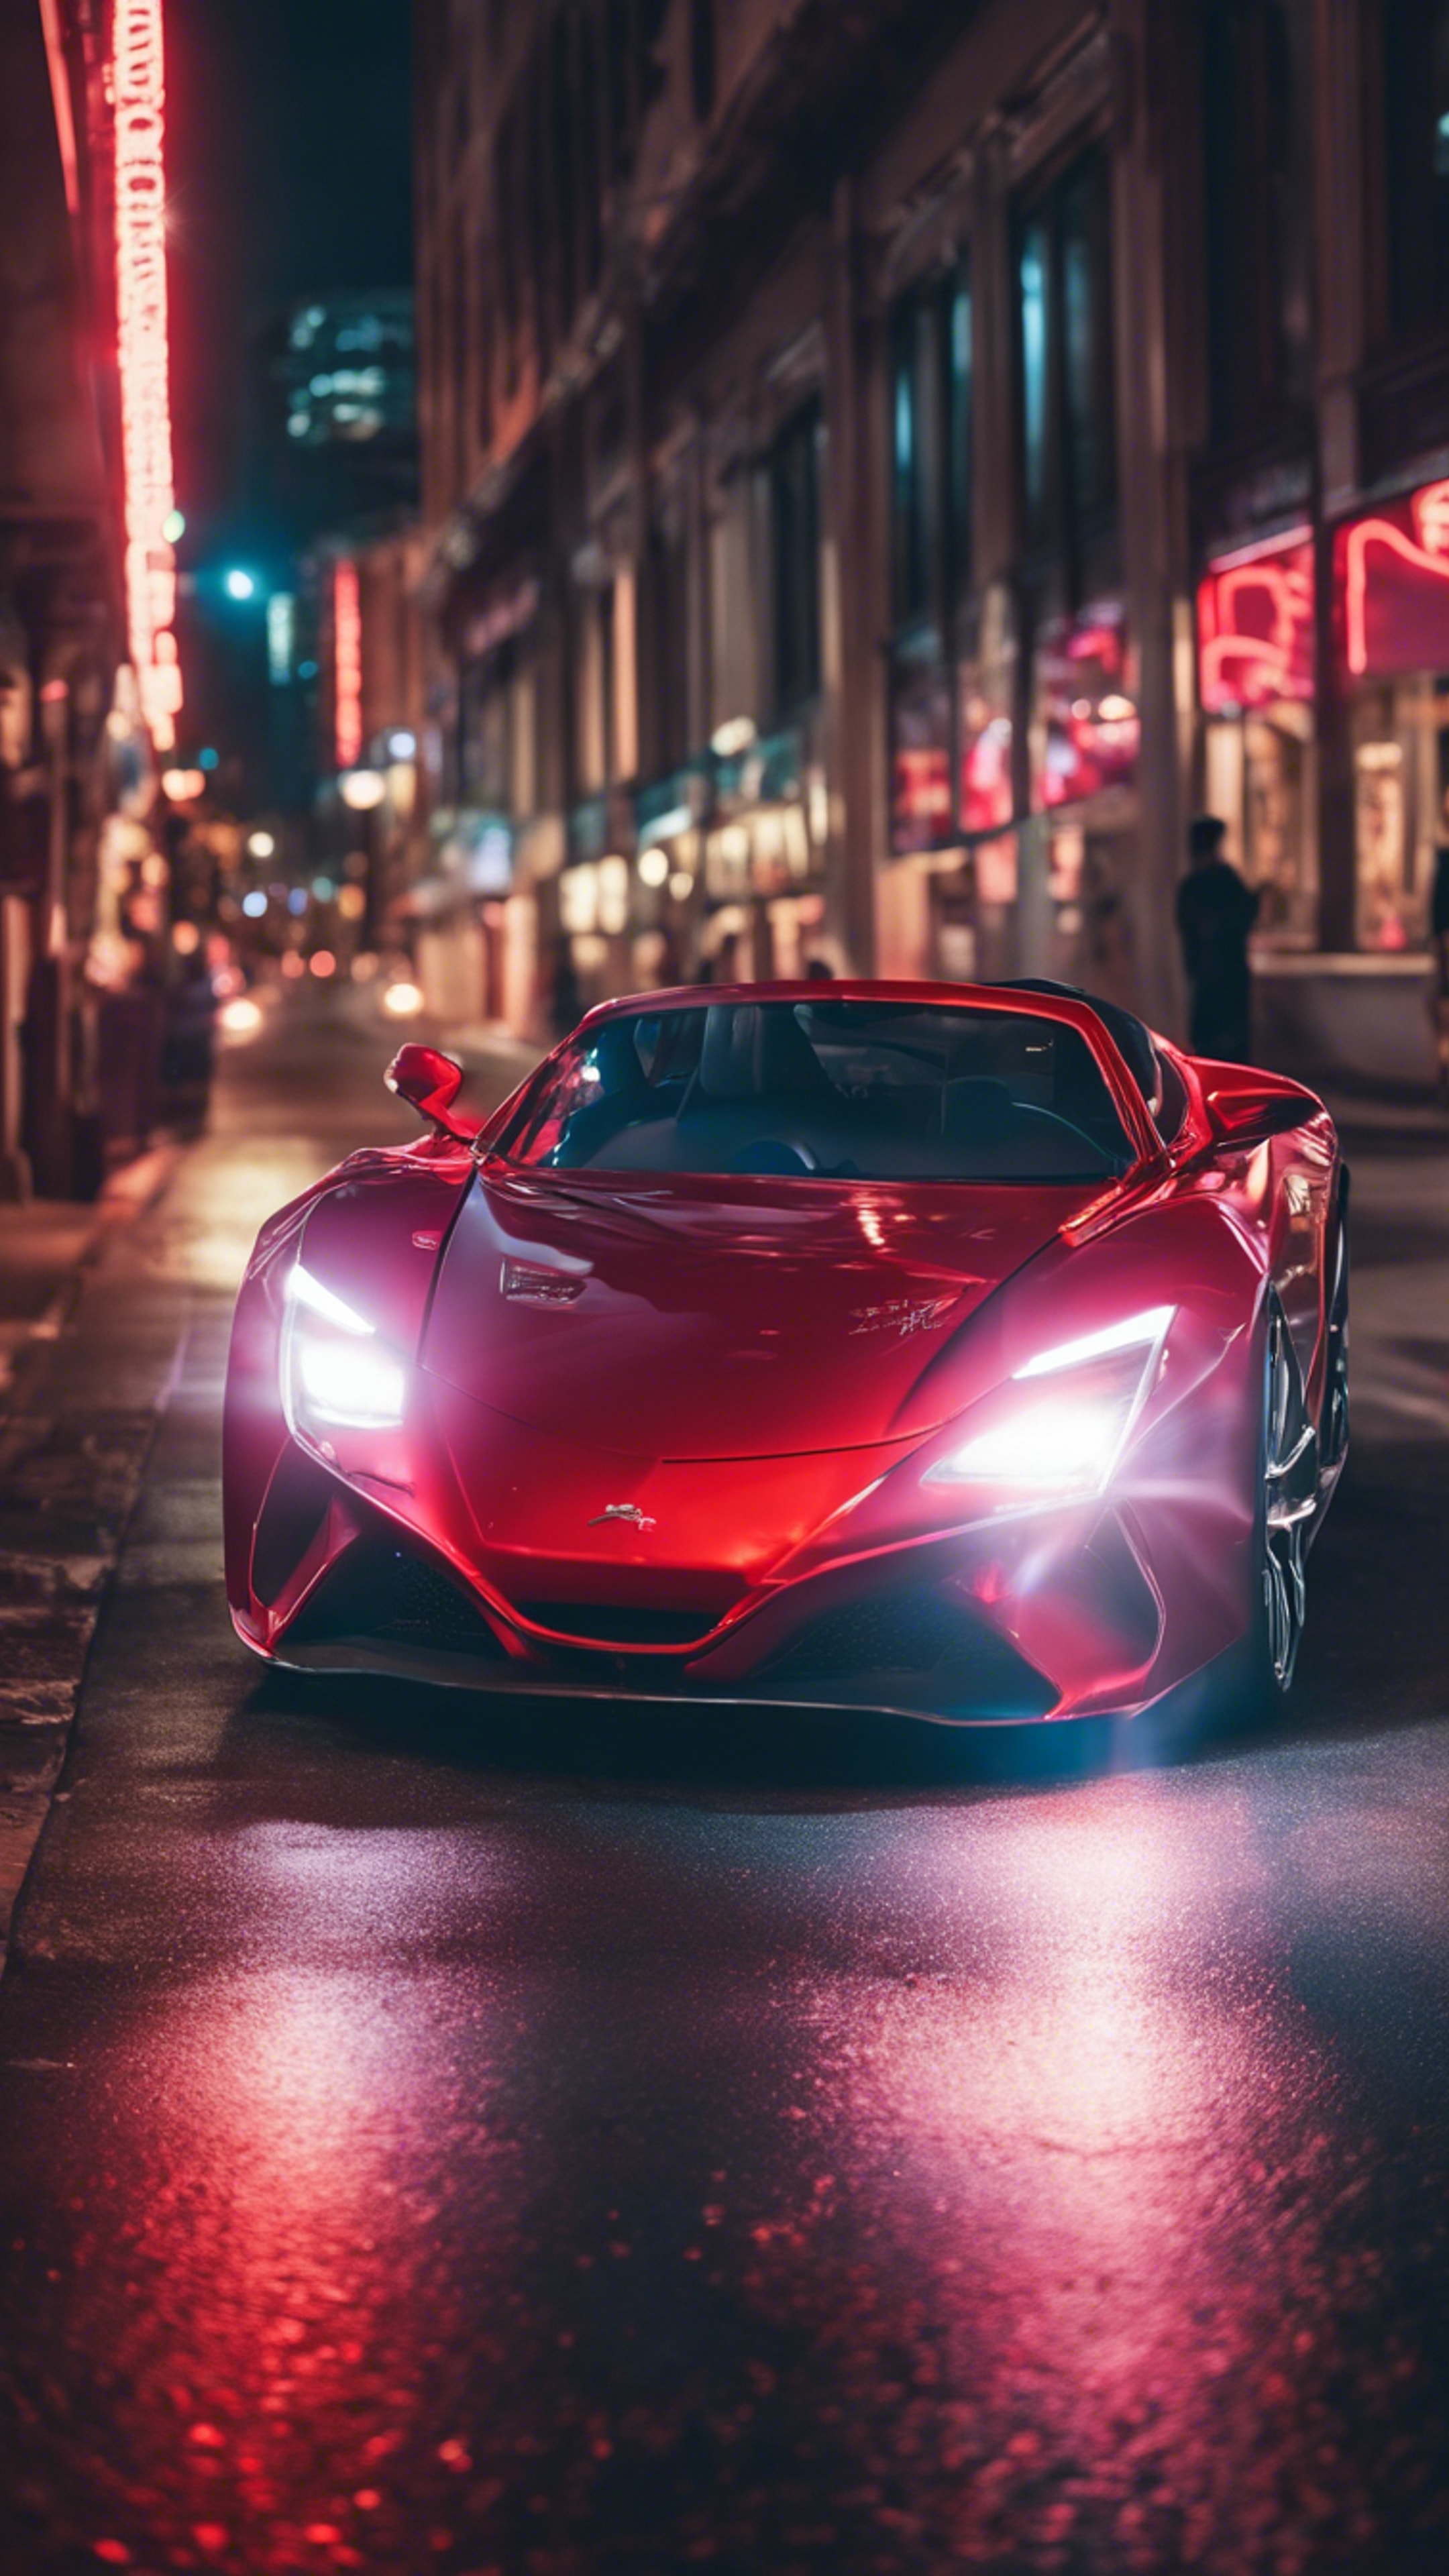 A sleek, cool red neon sports car zipping along a nighttime city street. 牆紙[c8ae8bc93cf04b2eb441]